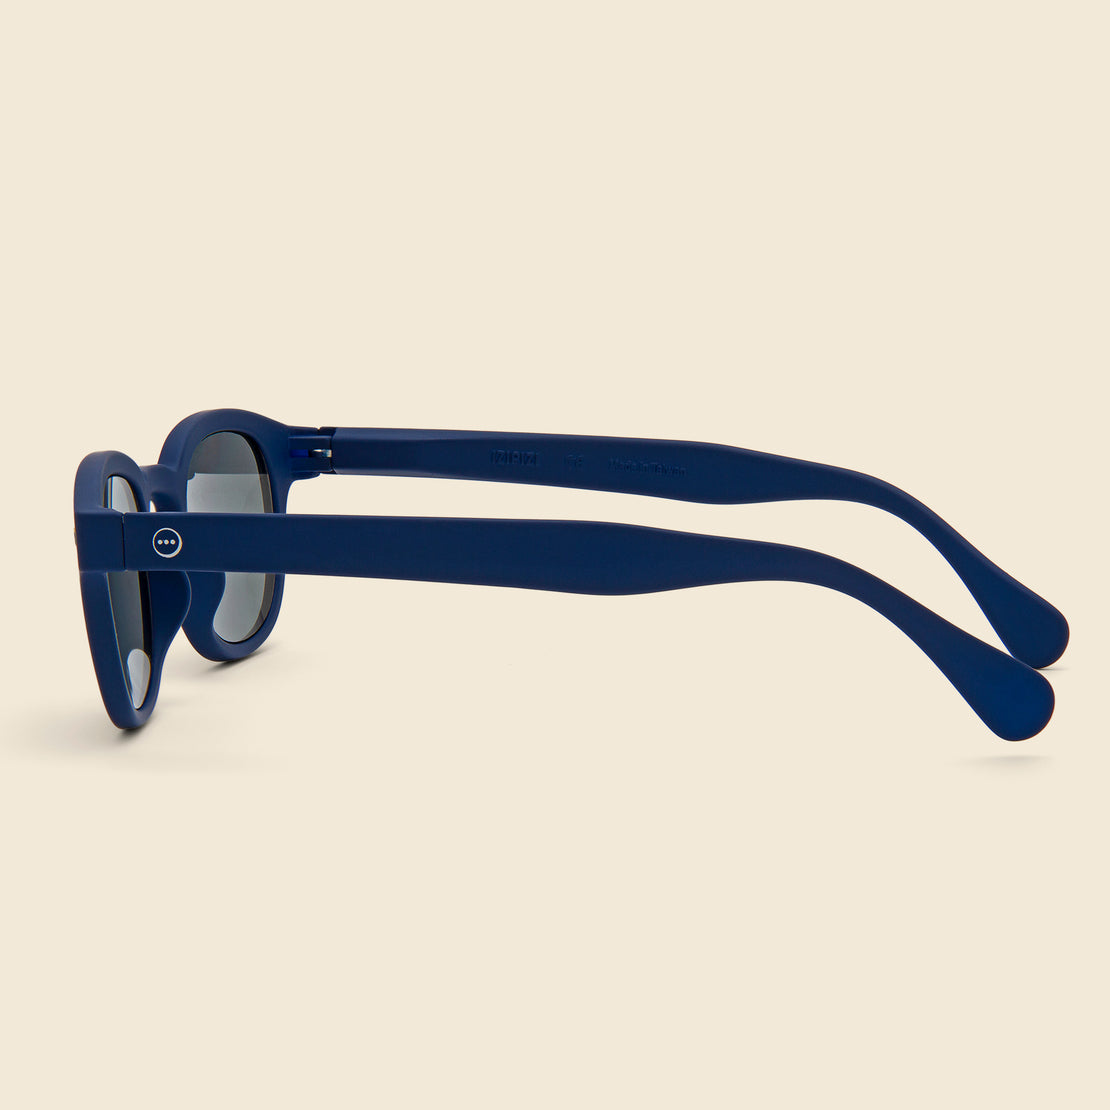 The Retro #C - Navy Blue - Izipizi - STAG Provisions - Accessories - Eyewear